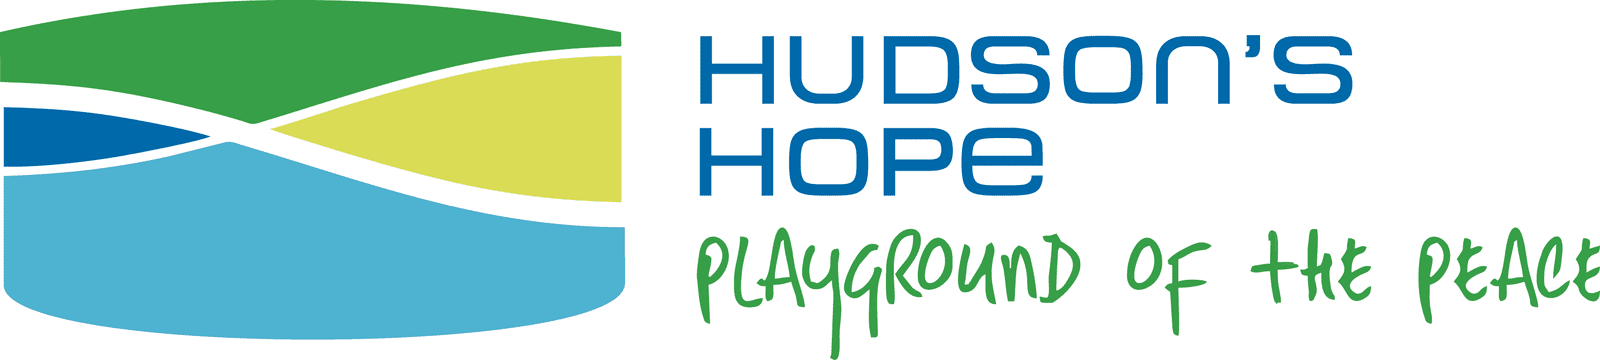 Hudson's Hope